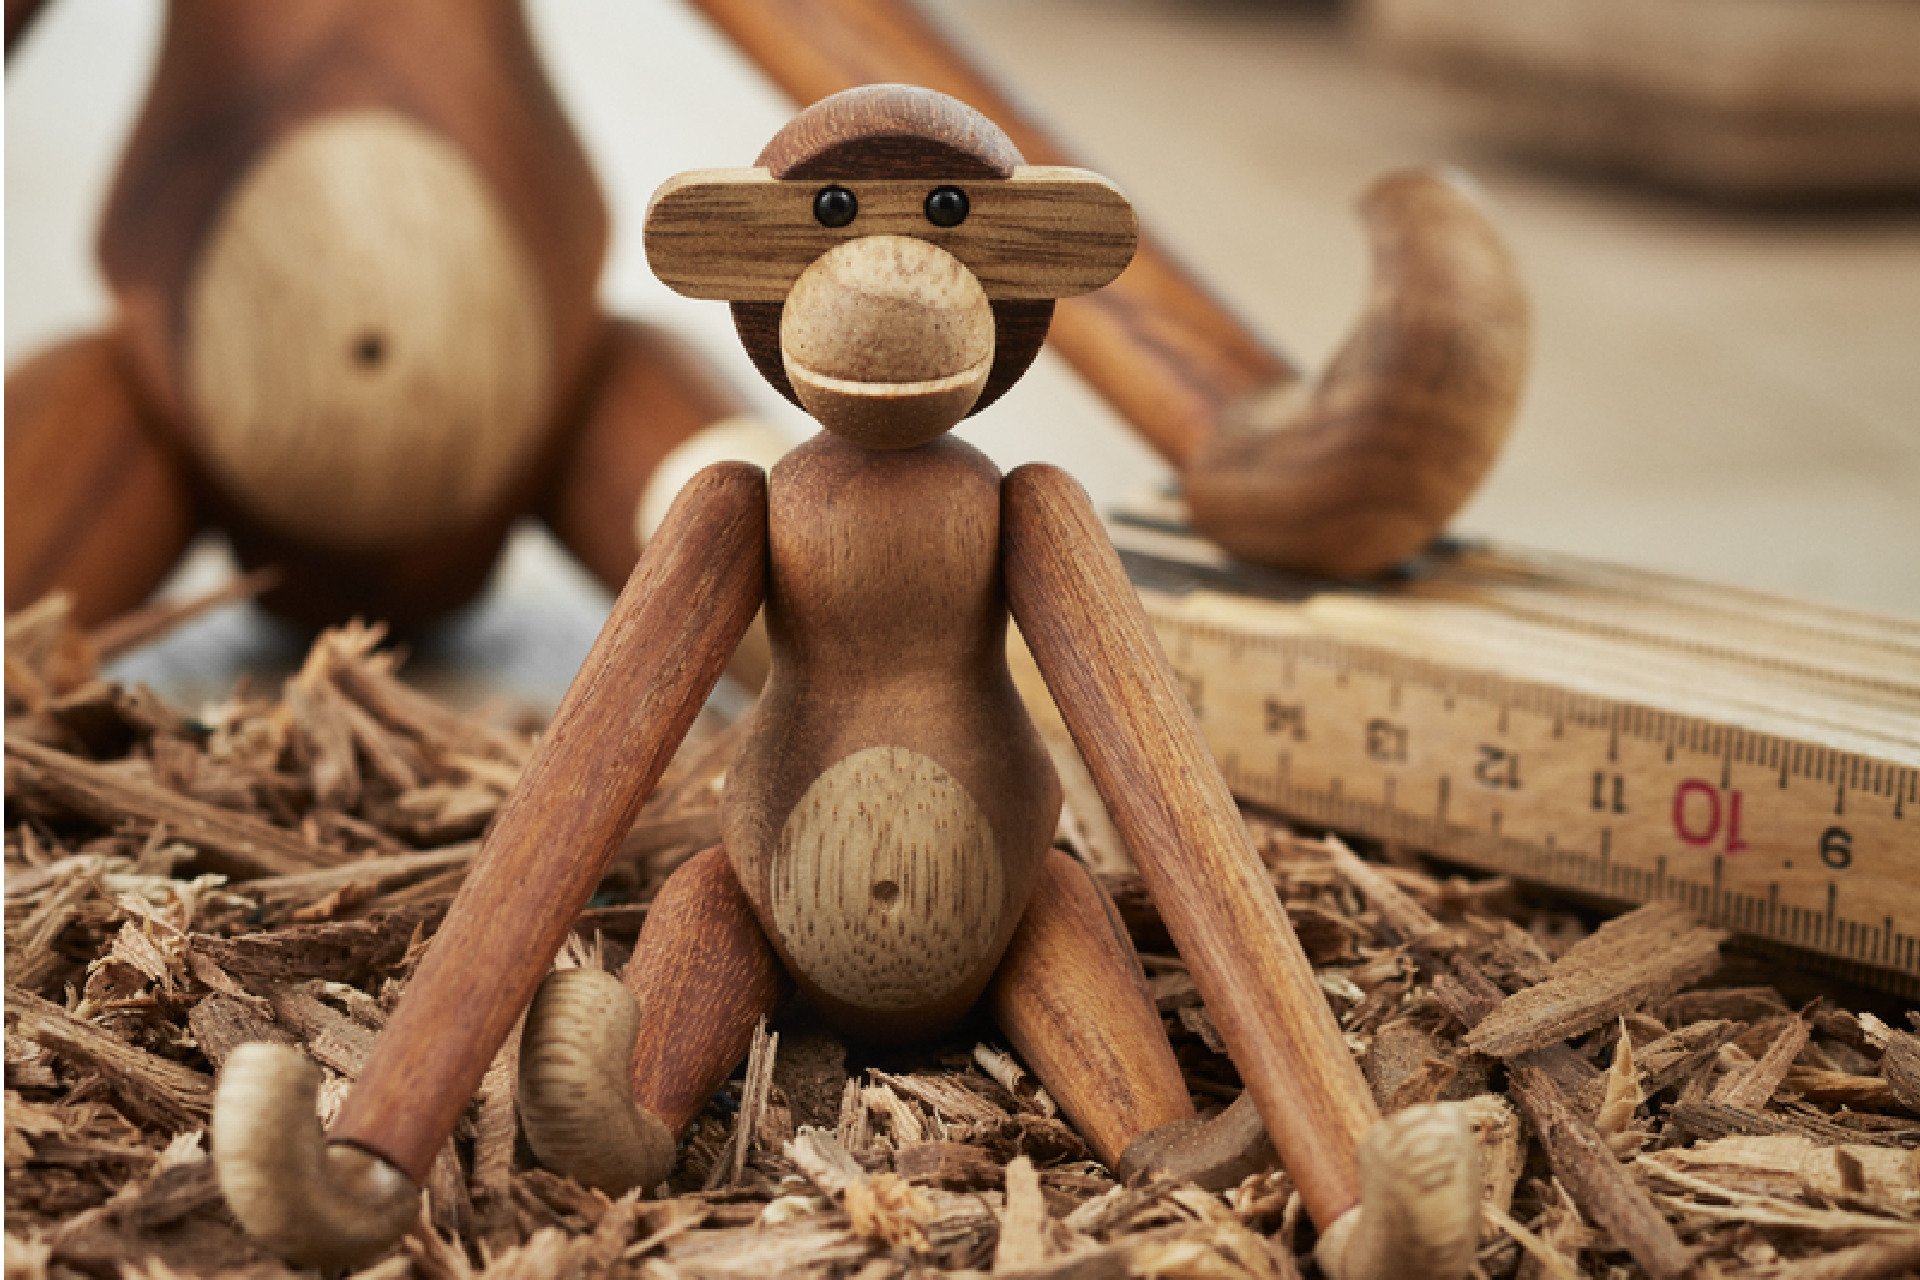 Monkey from Kay Bojesen sitting among wood shavings and ruler